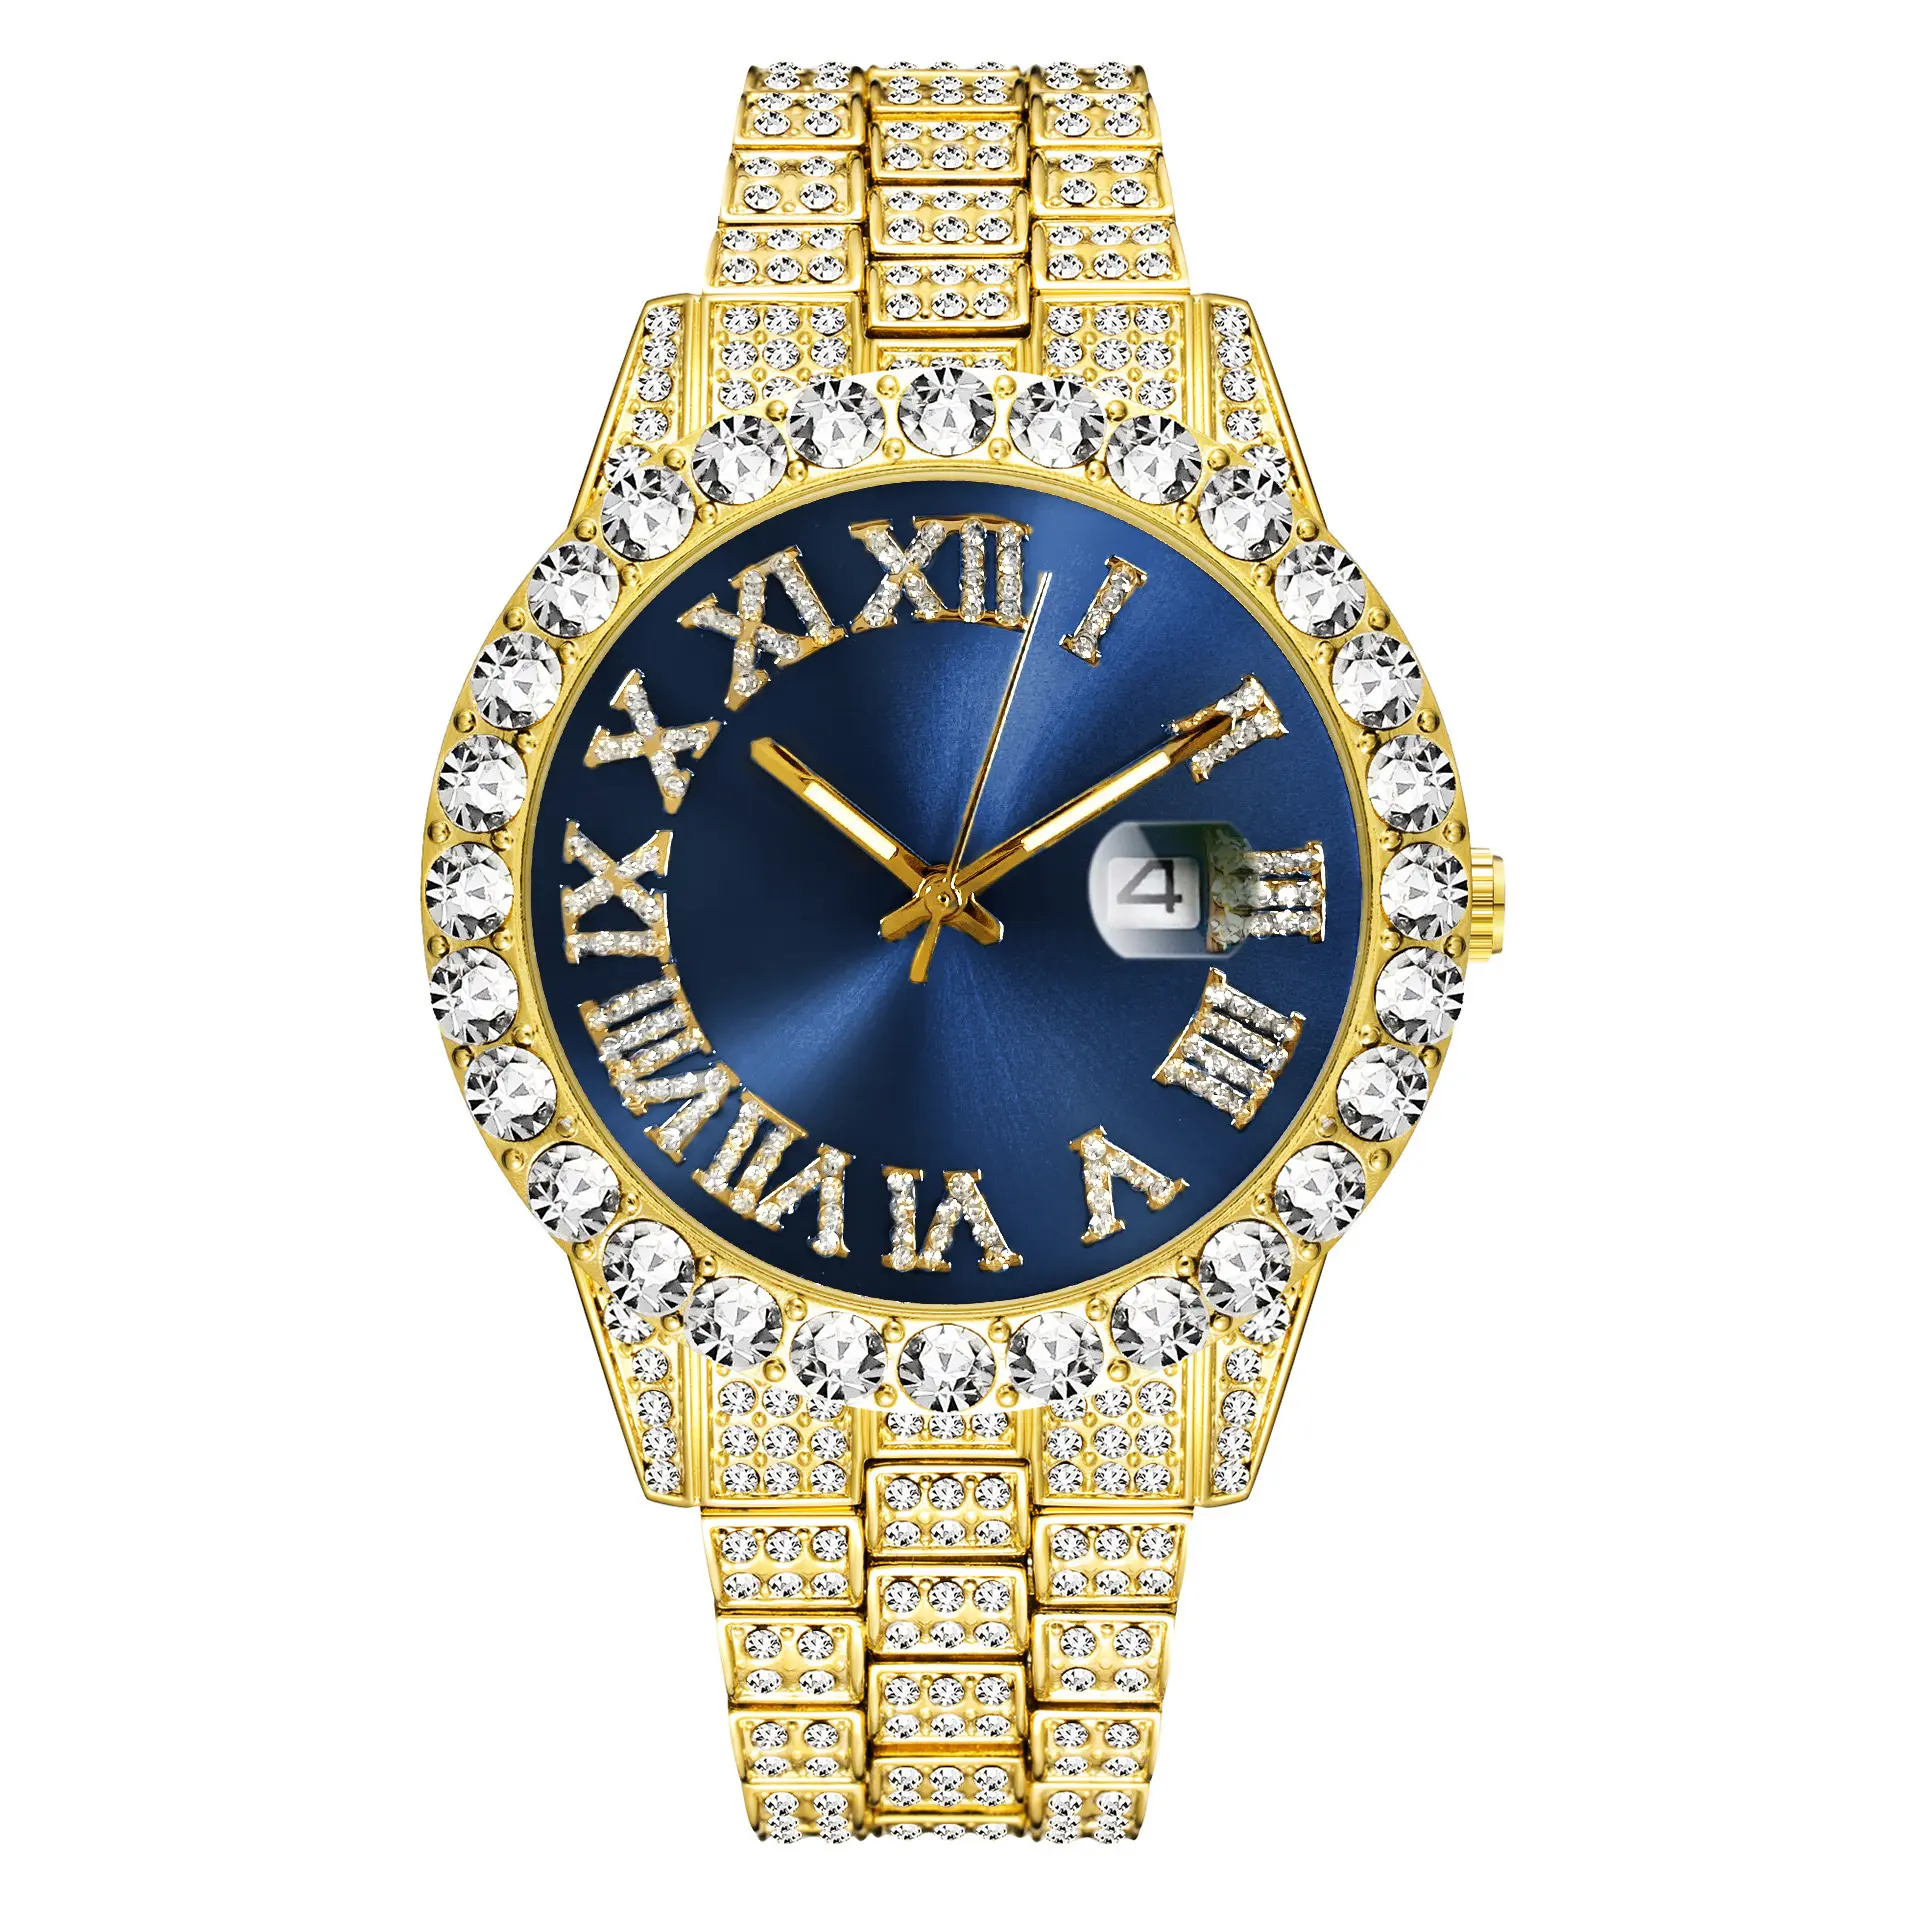 Hip hop Roman numerals diamond encrusted men's watch fashion trendy brand green face large dial quartz watch